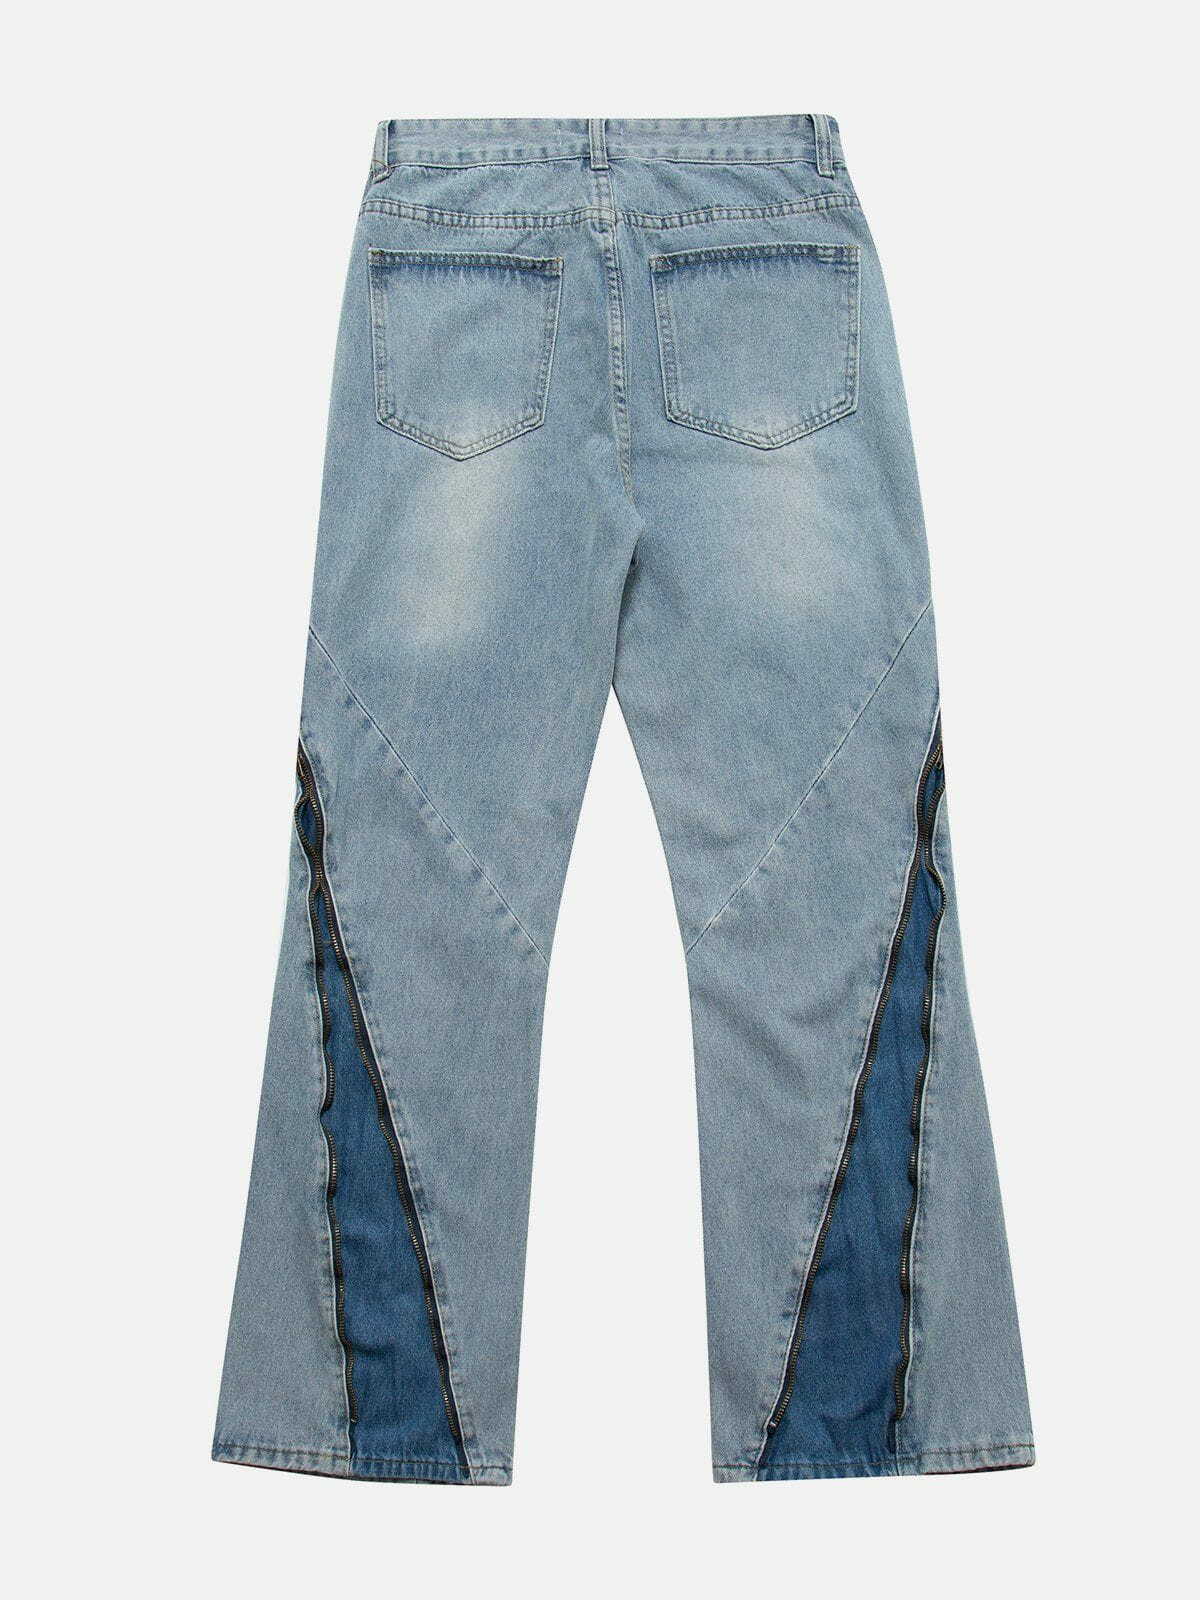 retro wash zip jeans adjustable fit & vintage vibes 4251